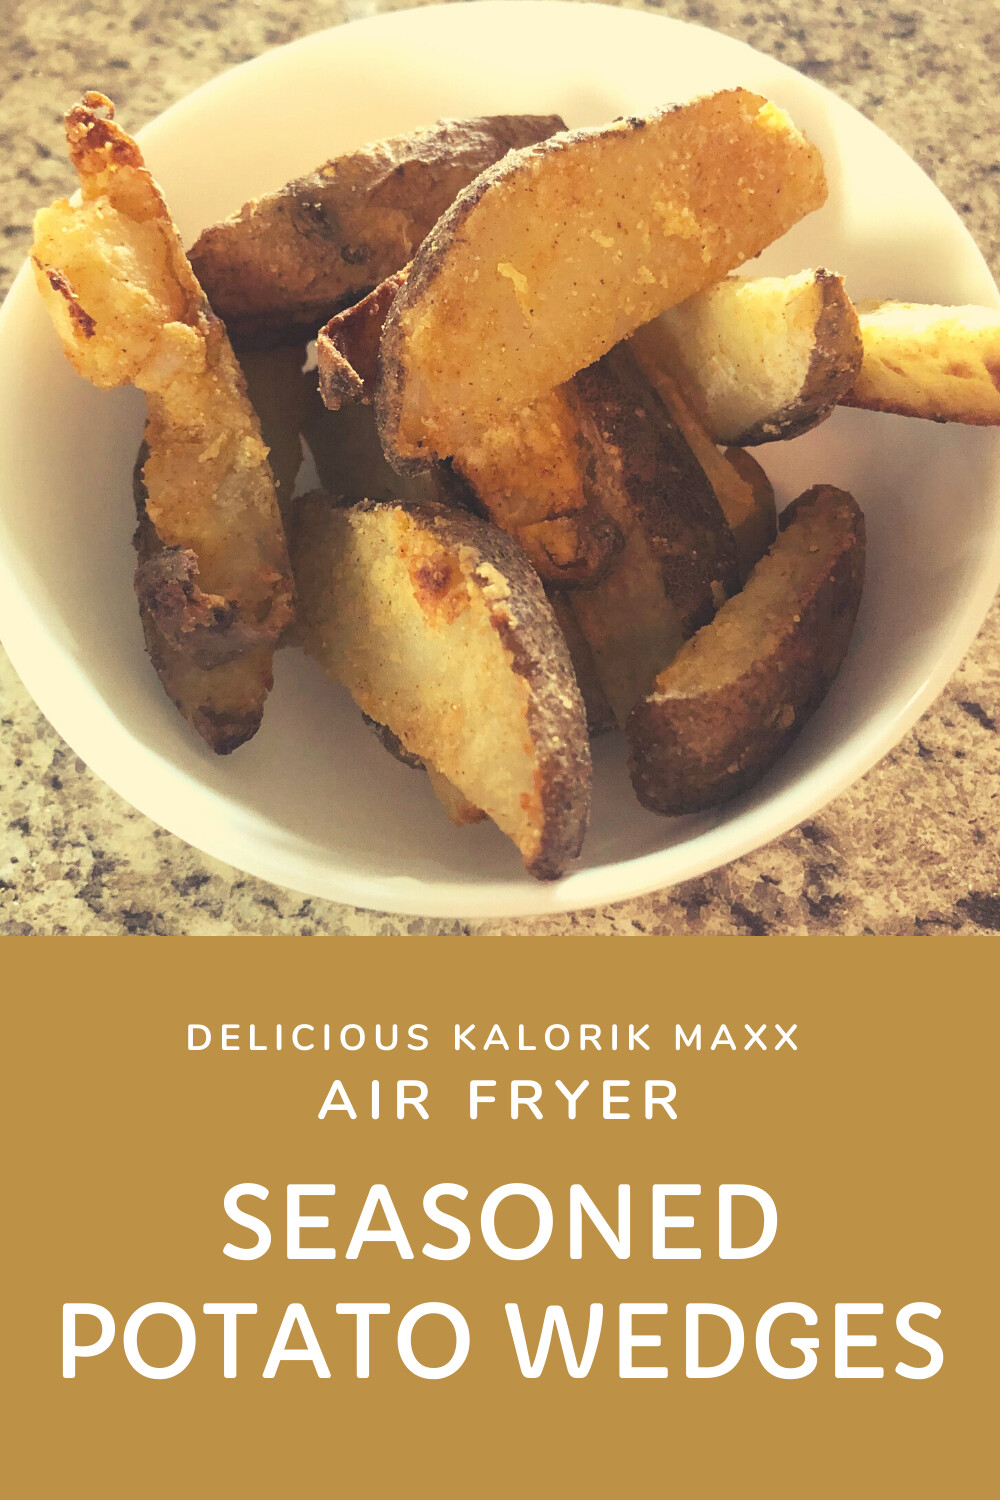 Cooking Seasoned Potato Wedges in Your Kalorik Maxx Air Fryer 26qt 